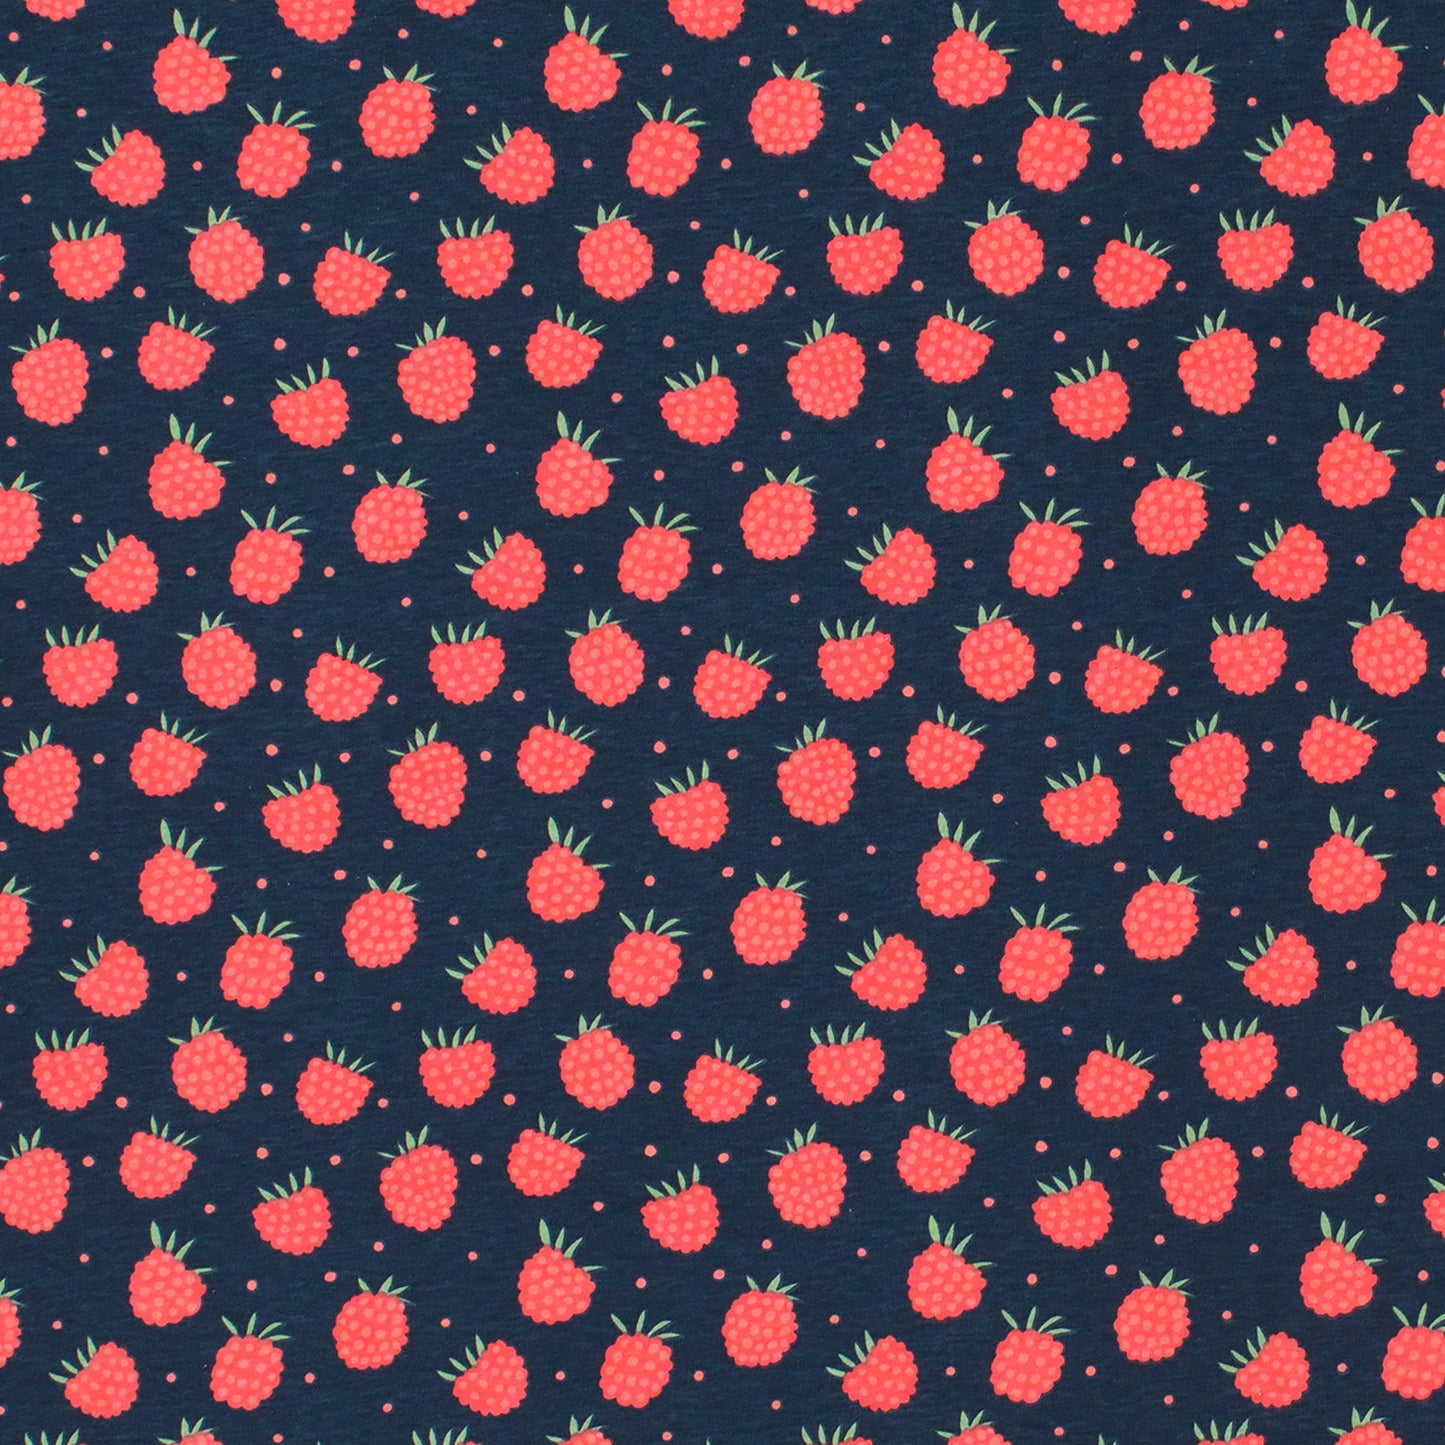 Valencia Dress - Raspberries Night Sky